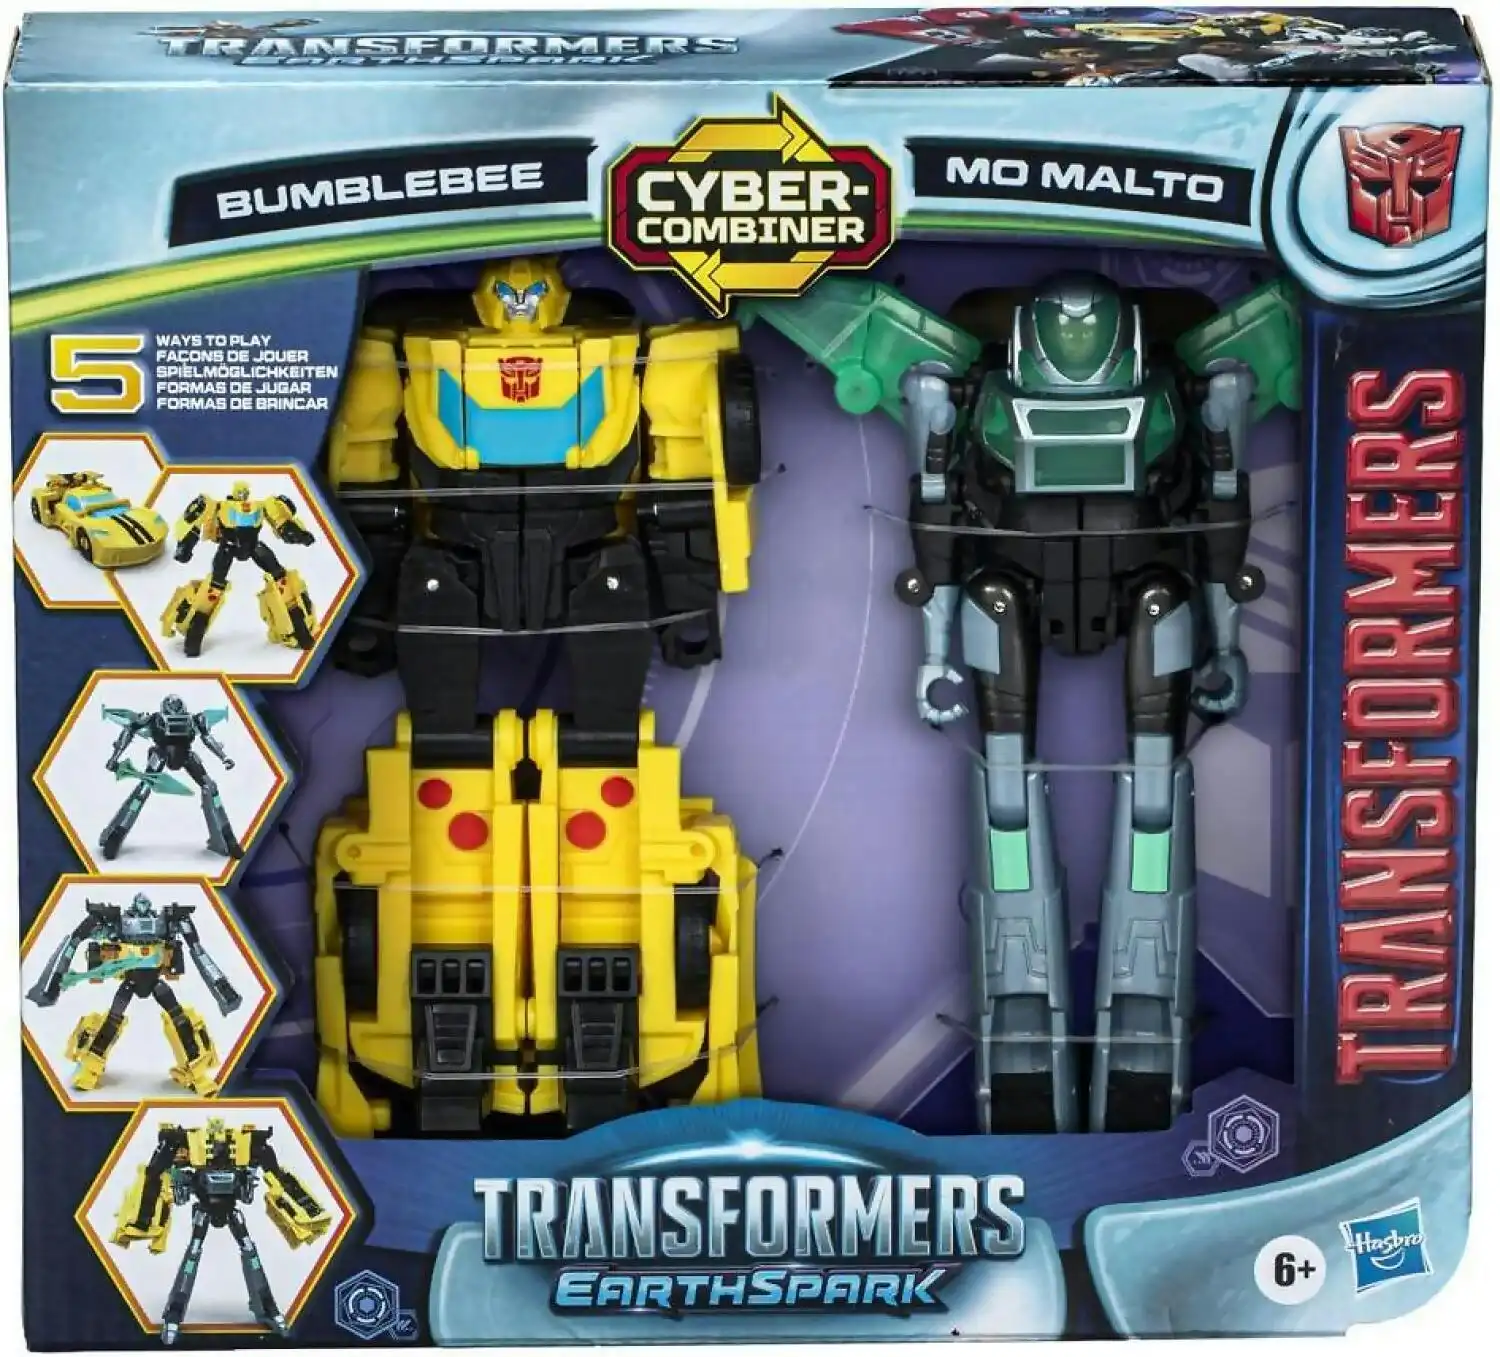 Transformers - Earthspark Cyber-combiner Bumblebee And Mo Malto Action Figures - Hasbro